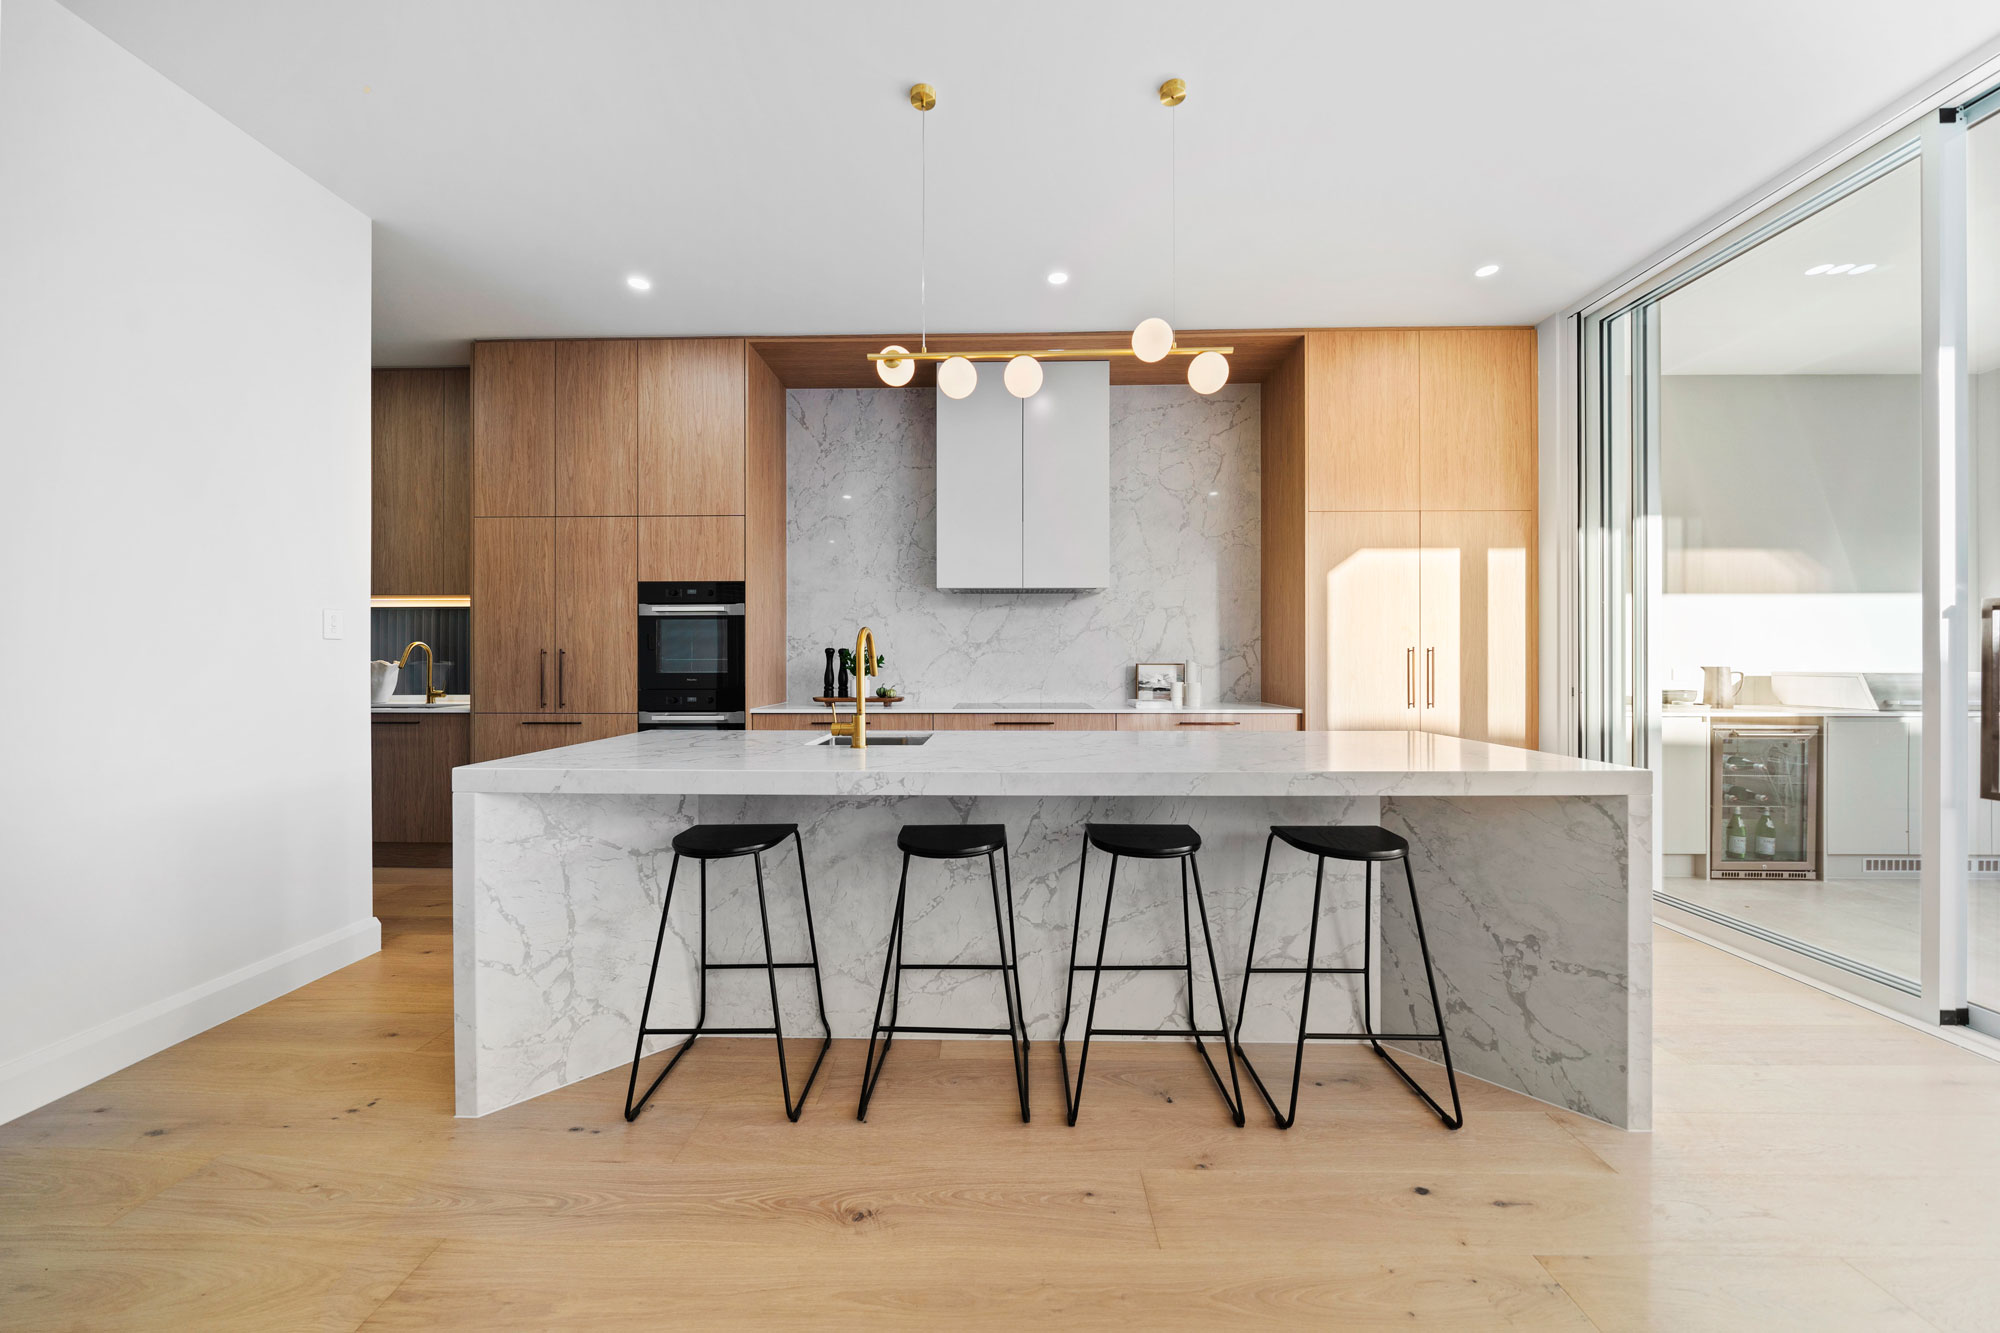 Geometric kitchen design with stone benchtop island, and stone splash backs. Uniq Stone job